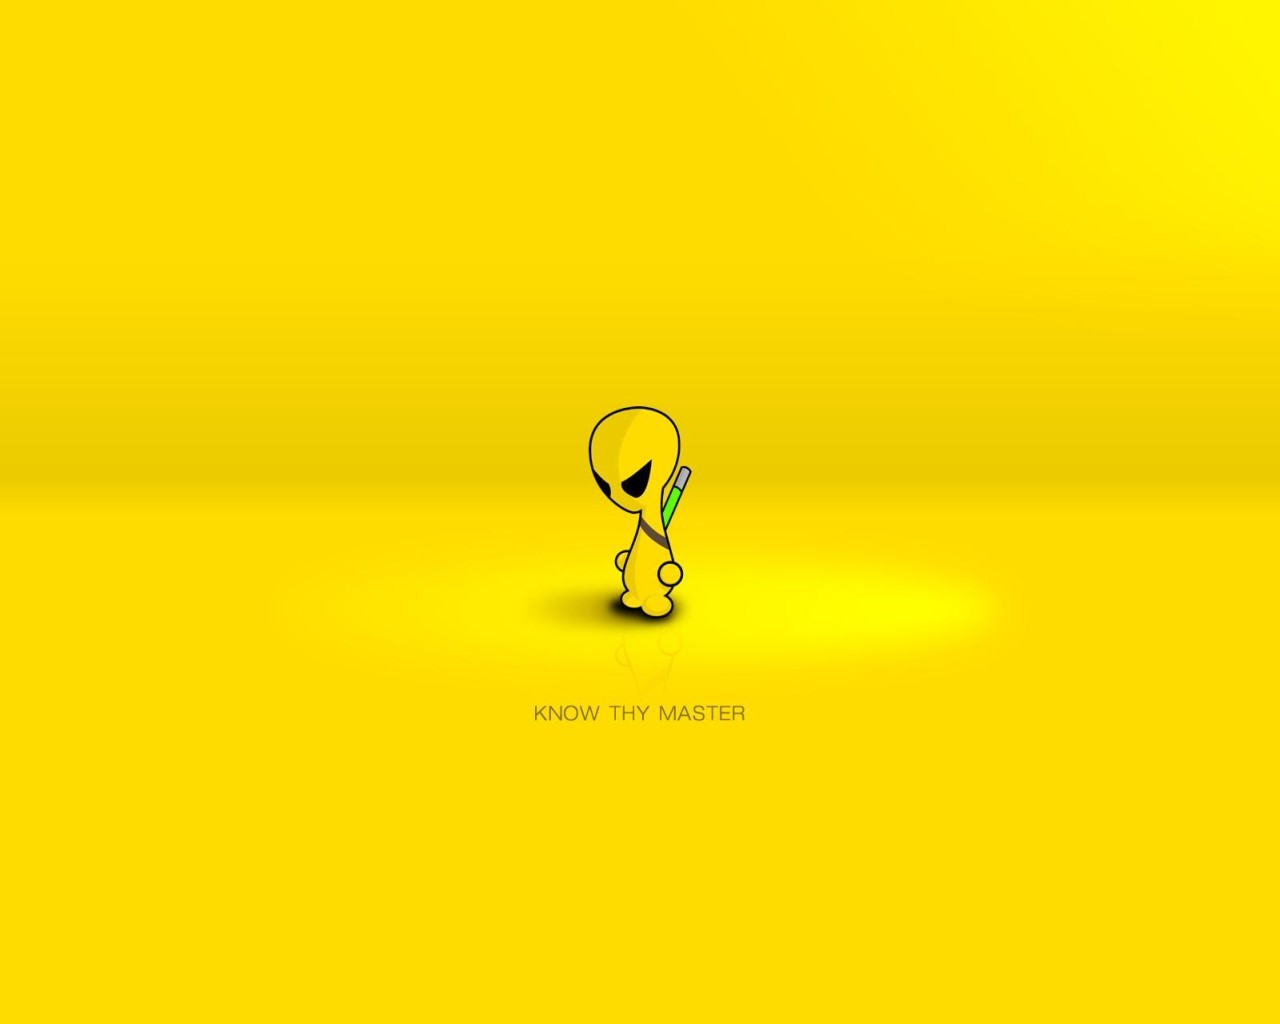 Alien Yellow Wallpaper, Wallpapers For Desktop, Alien, - 960x800 - HD Wallpaper 